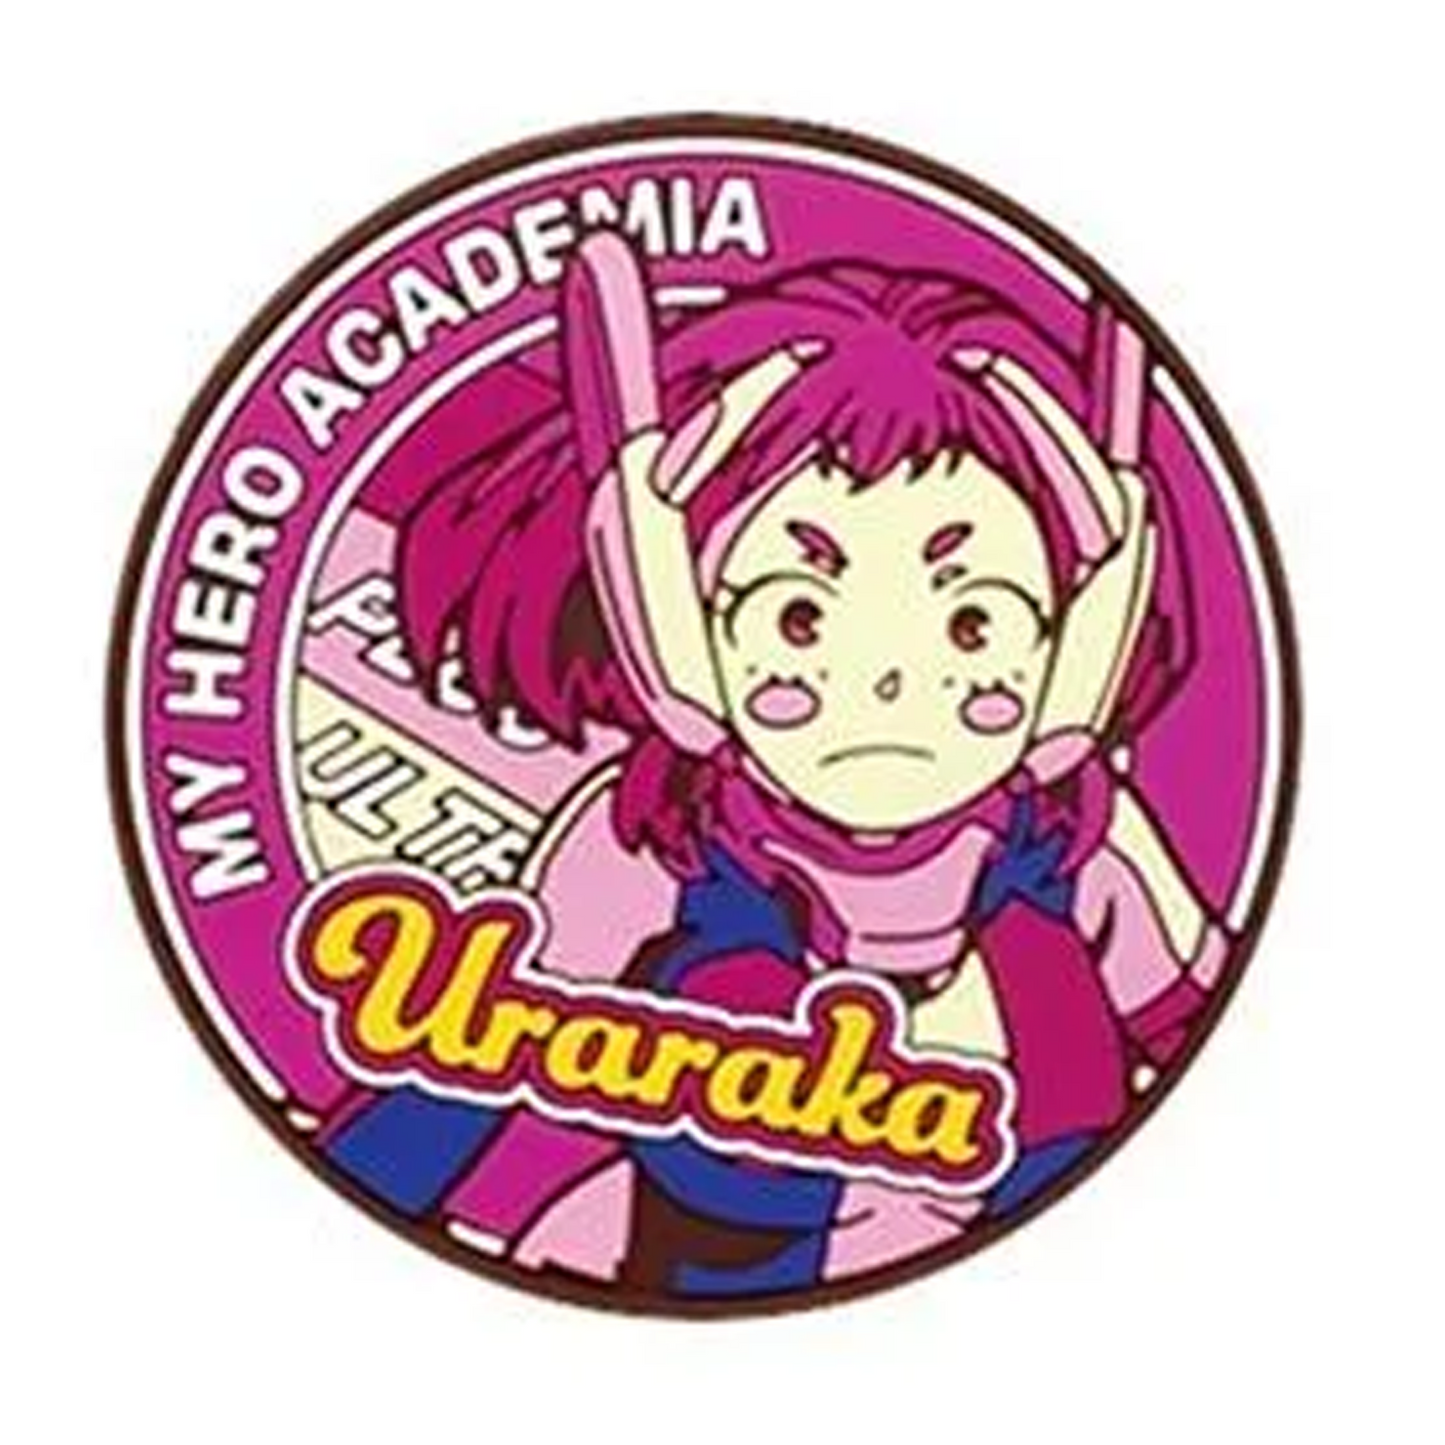 My Hero Academia Rubber Coaster Gachapon Capsule Toy (Uraraka) | Happy Piranha